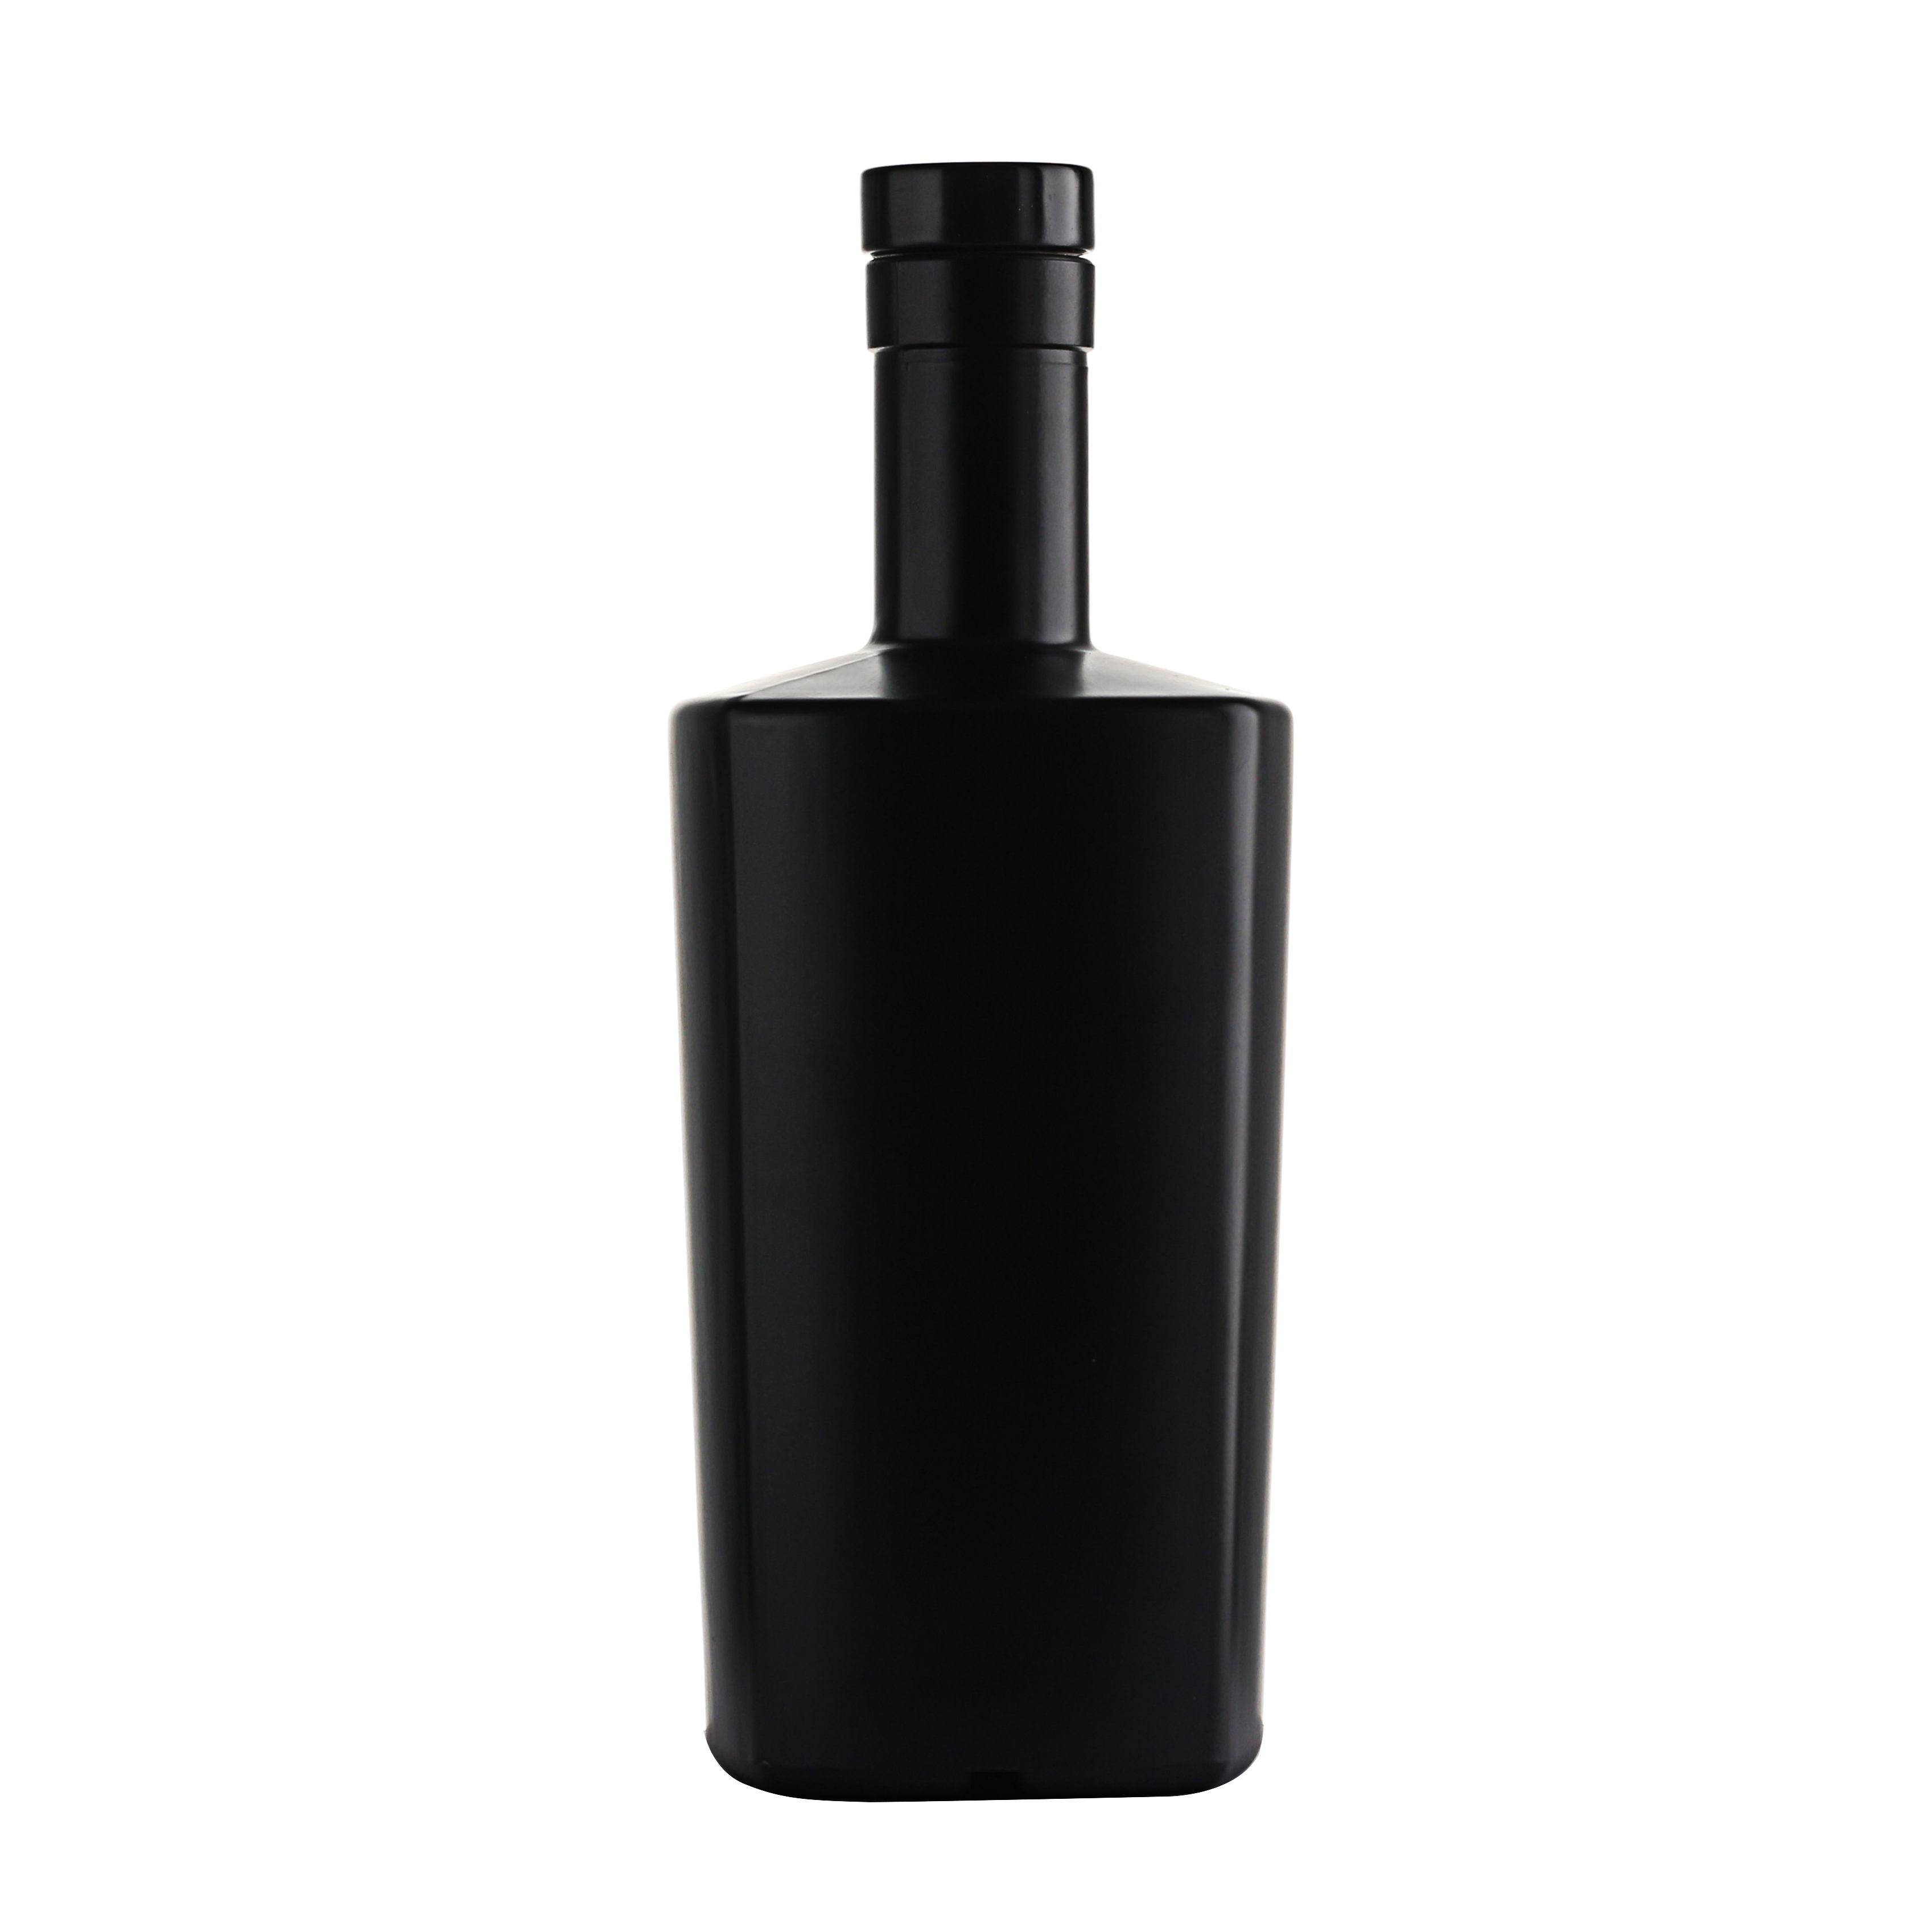 750 ml matte black liquor glass bottle with cork Featured Image